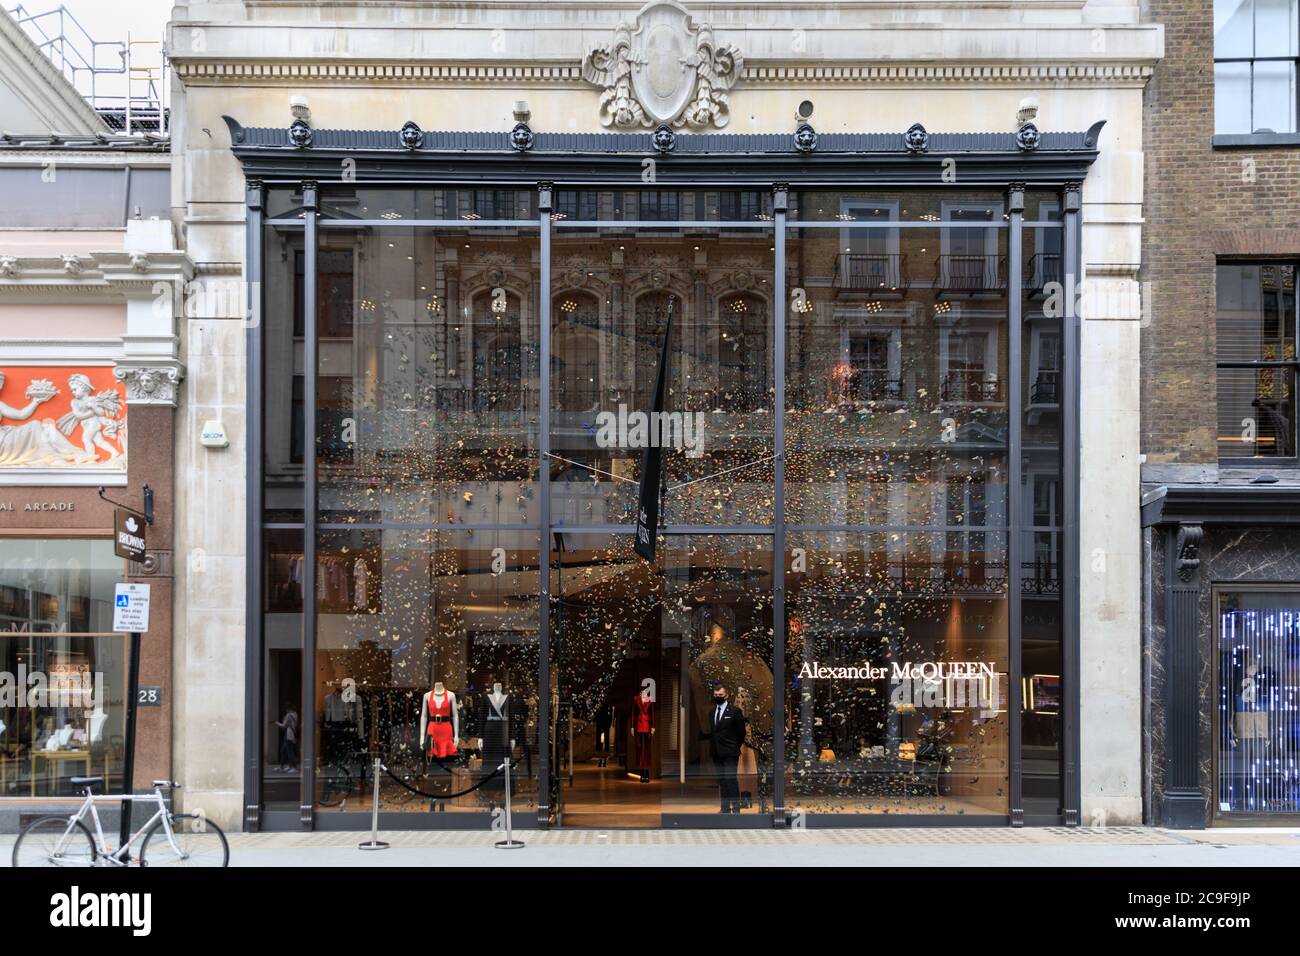 First look: Alexander McQueen's new London flagship